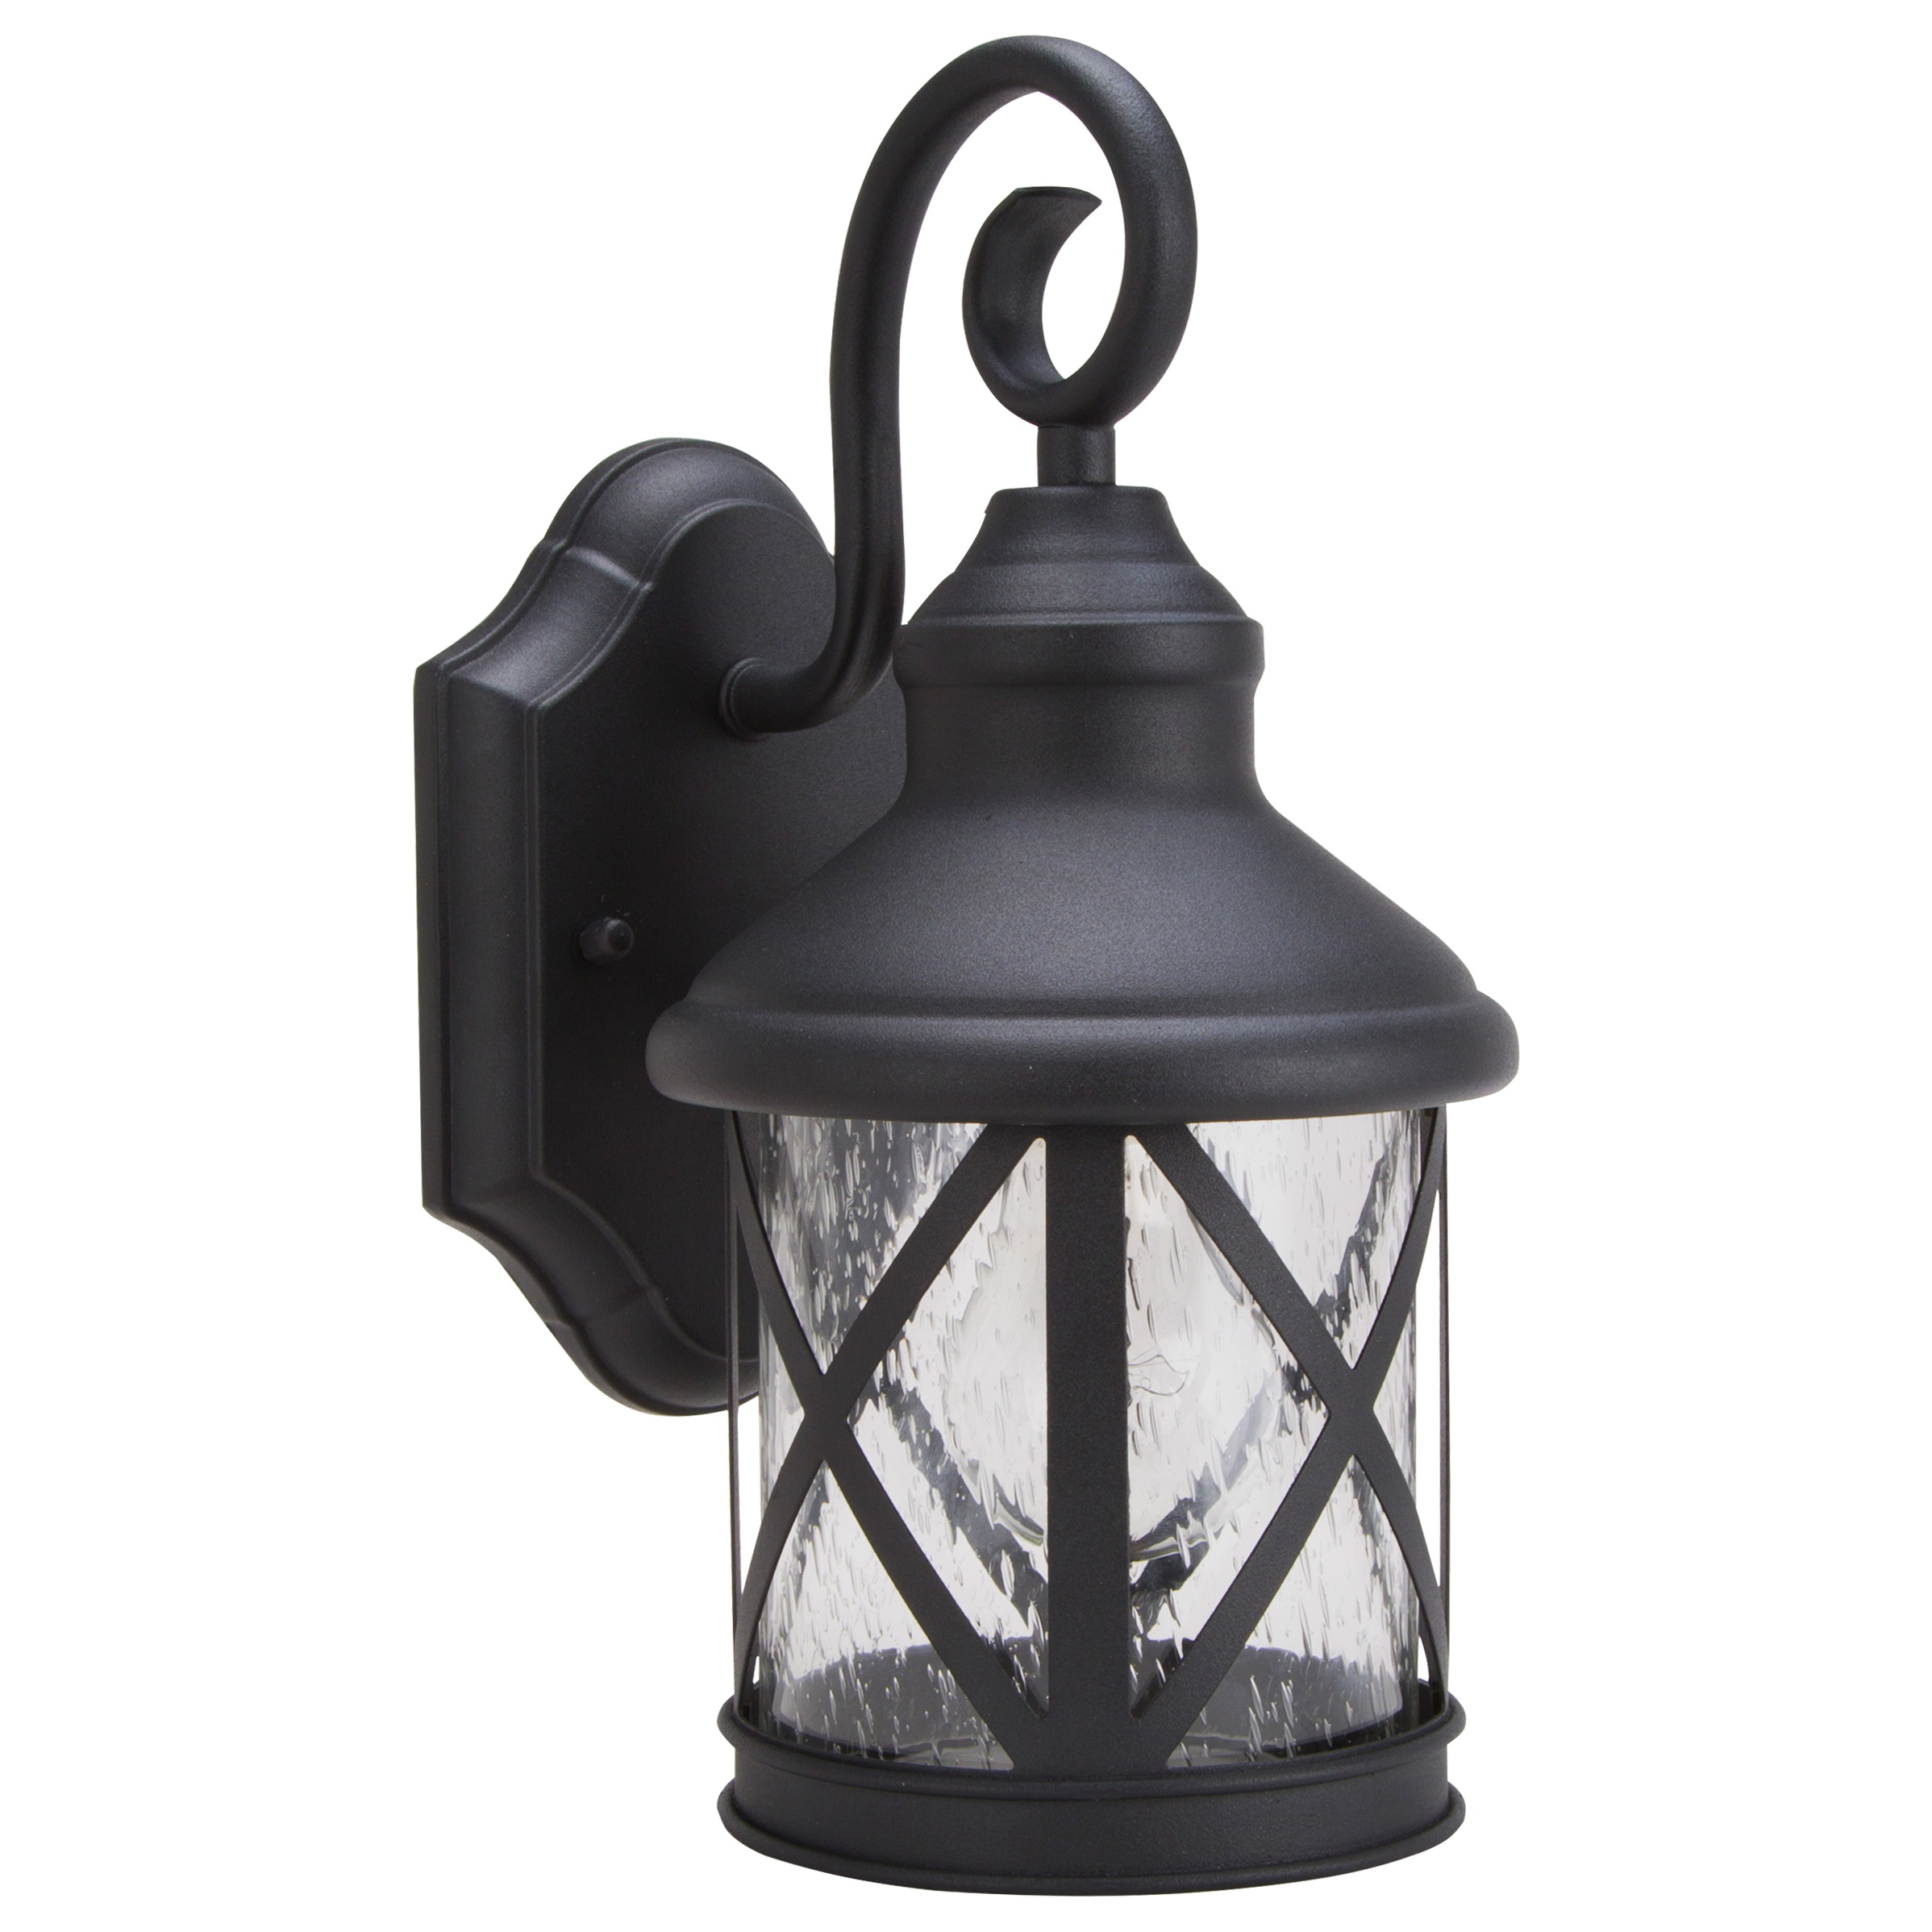 LT-H01 Single Light Outdoor Wall Lantern, 120 V, 60 W, A19 or CFL Lamp, Steel Fixture, Black Fixture